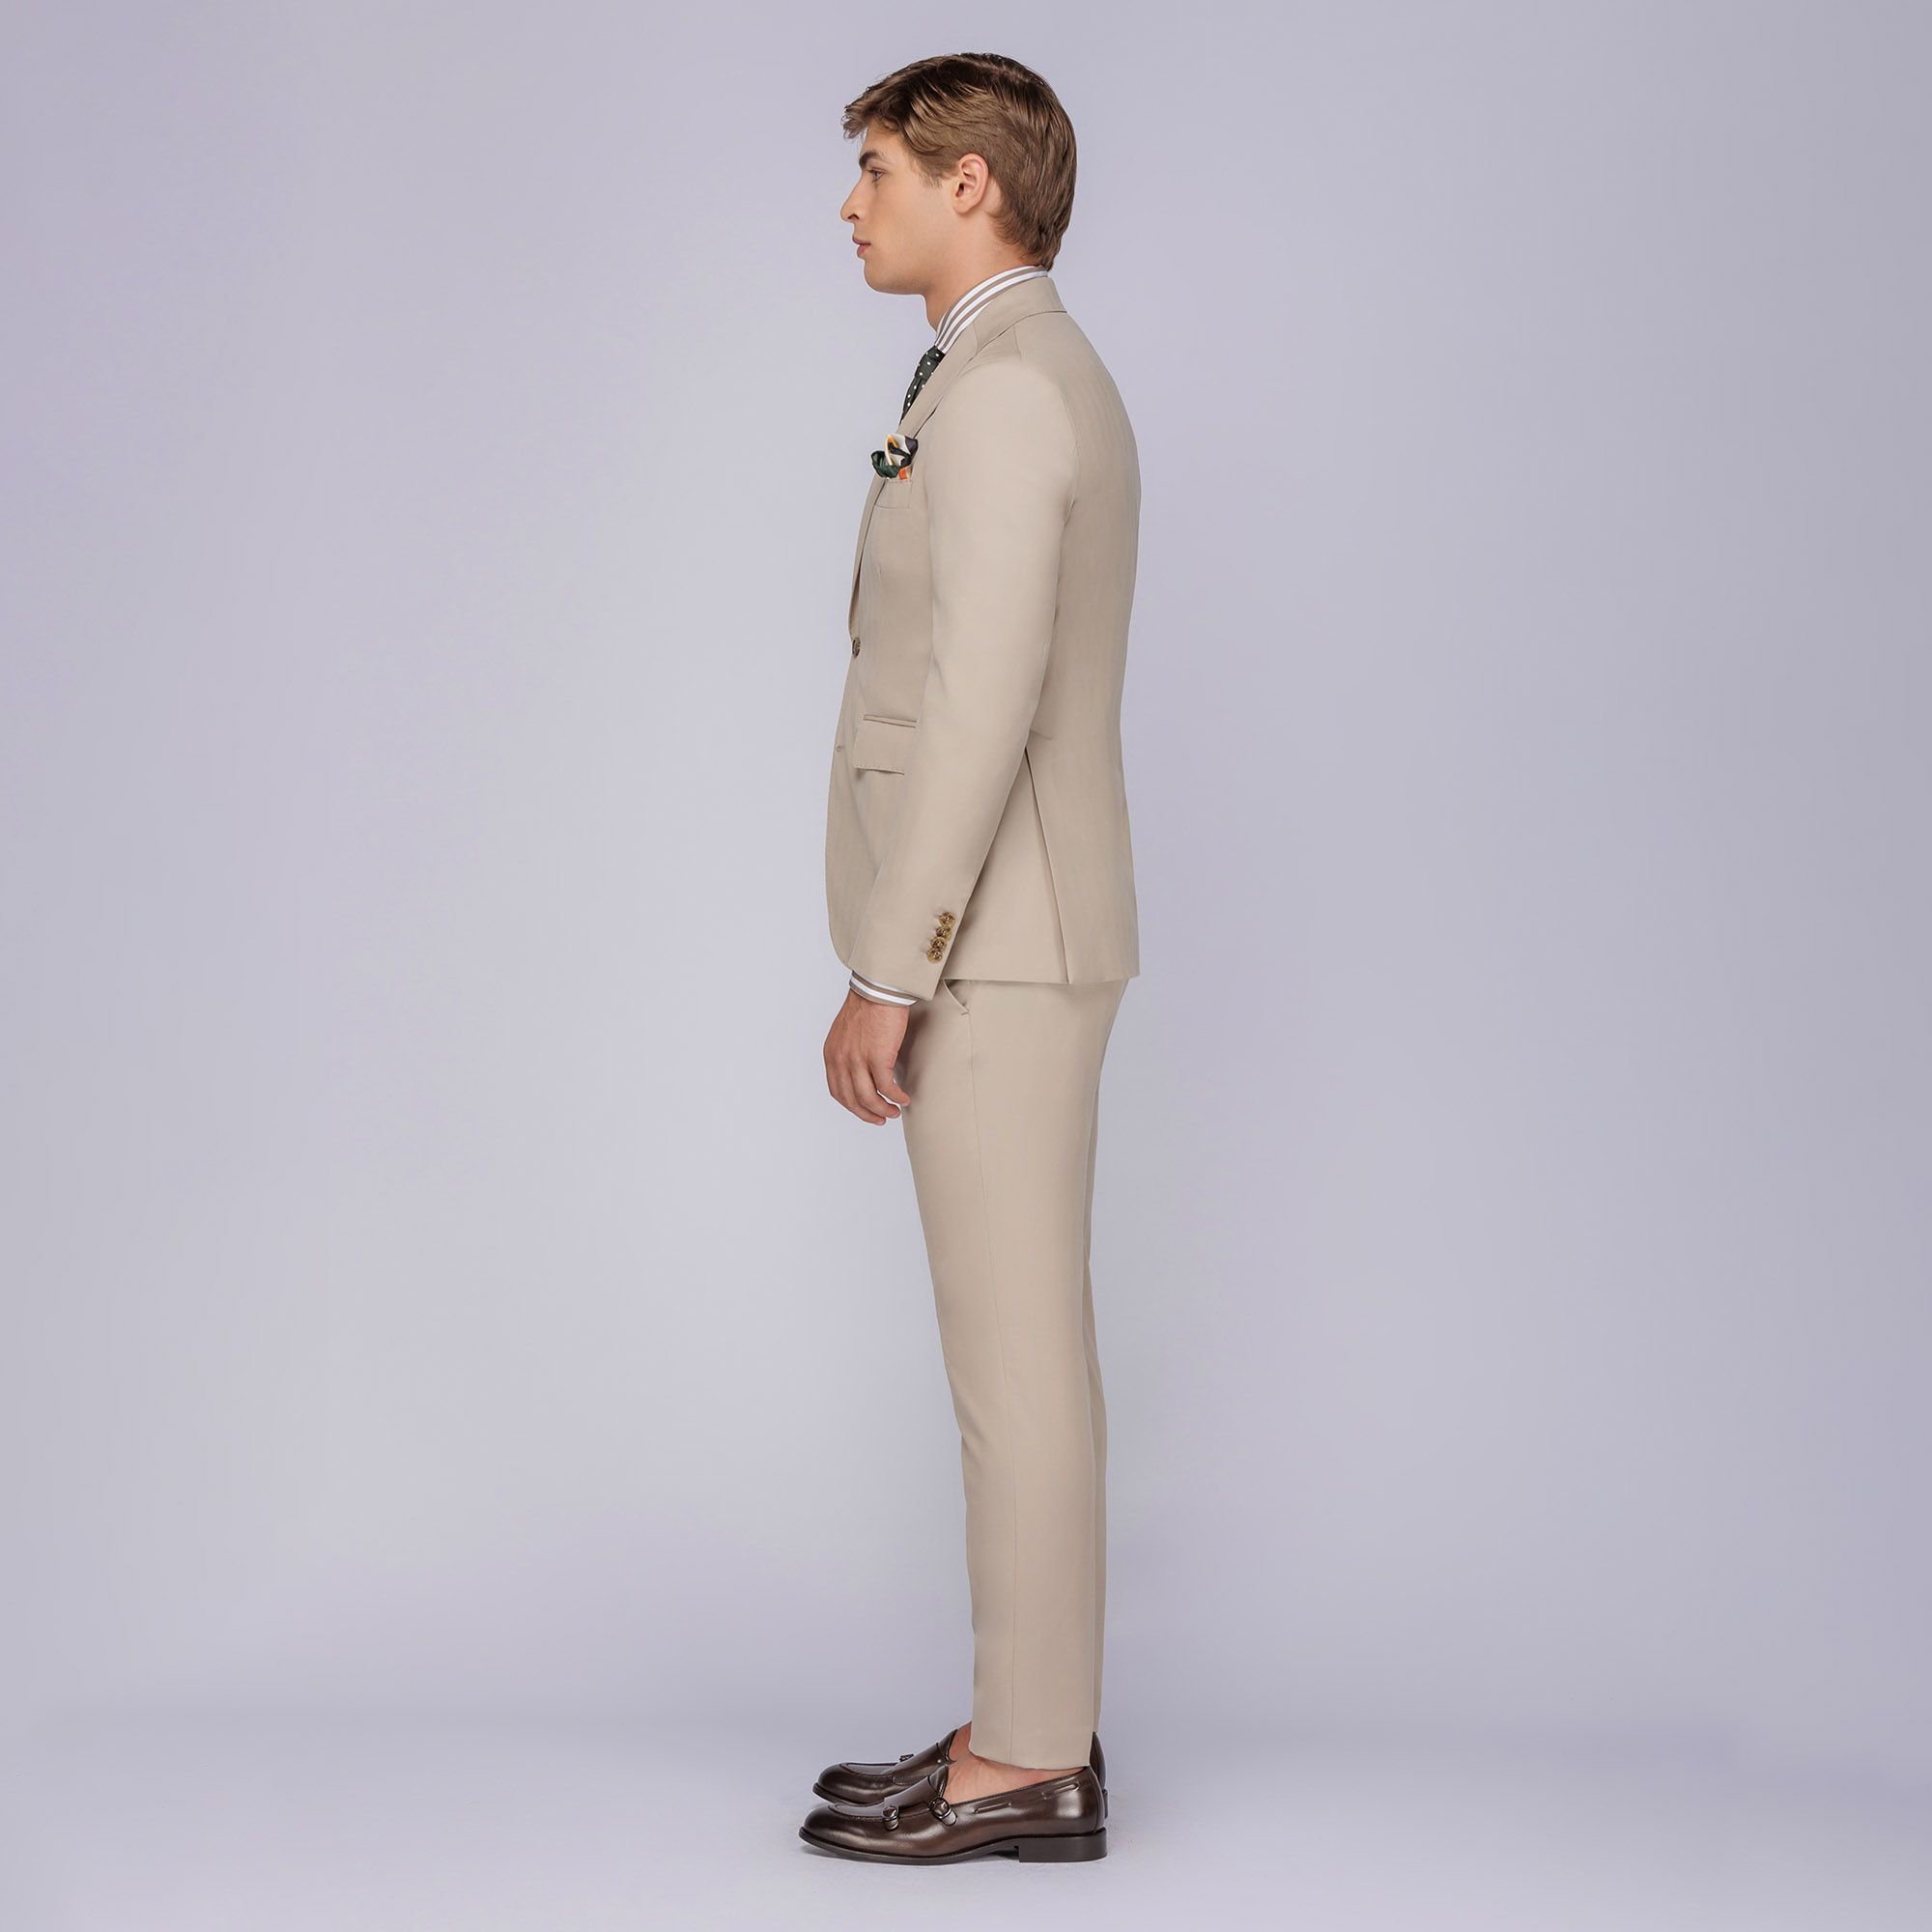 Men's Solaro Suit Beige